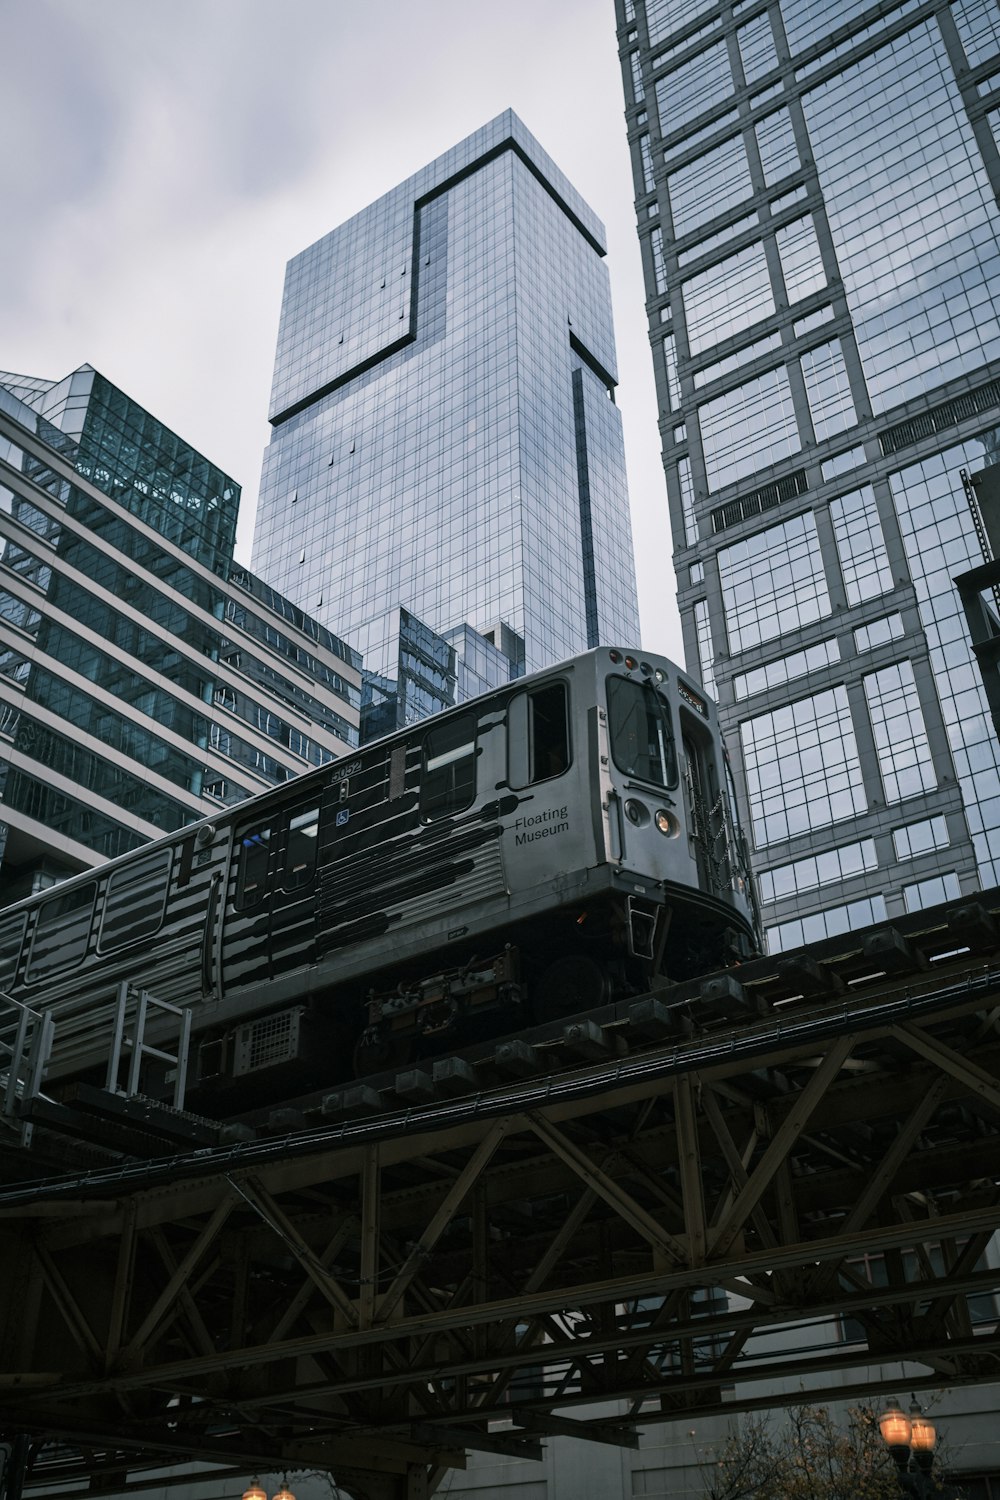 gray train on track